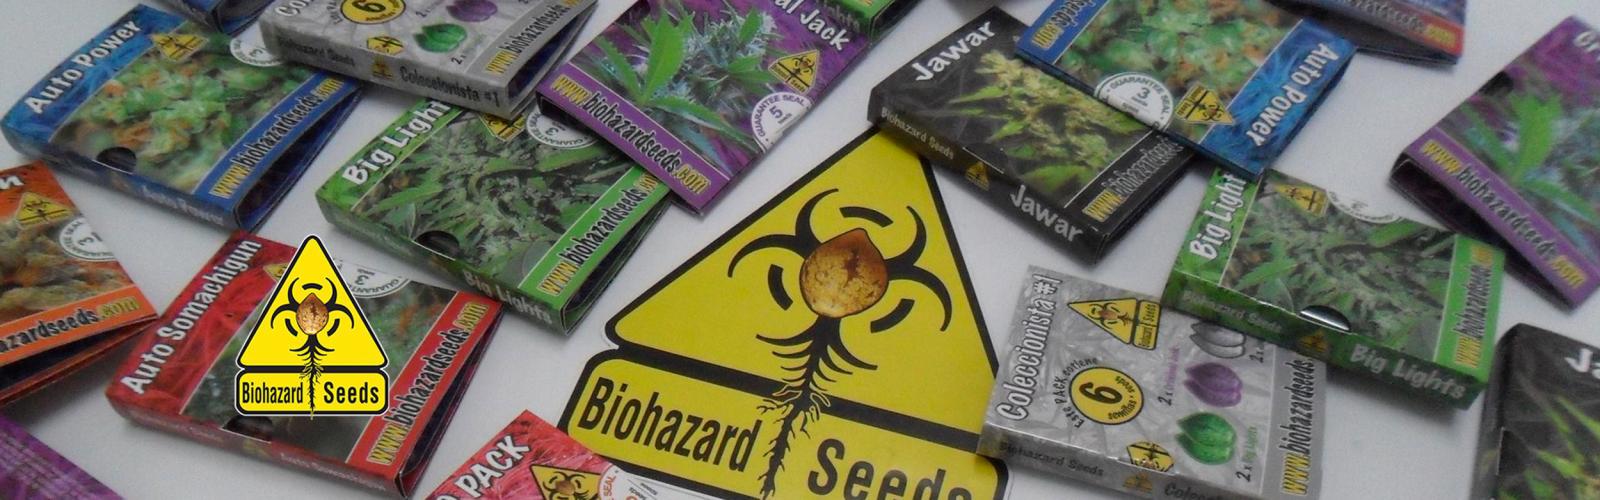 Biohazard Seeds Cannabis Seeds